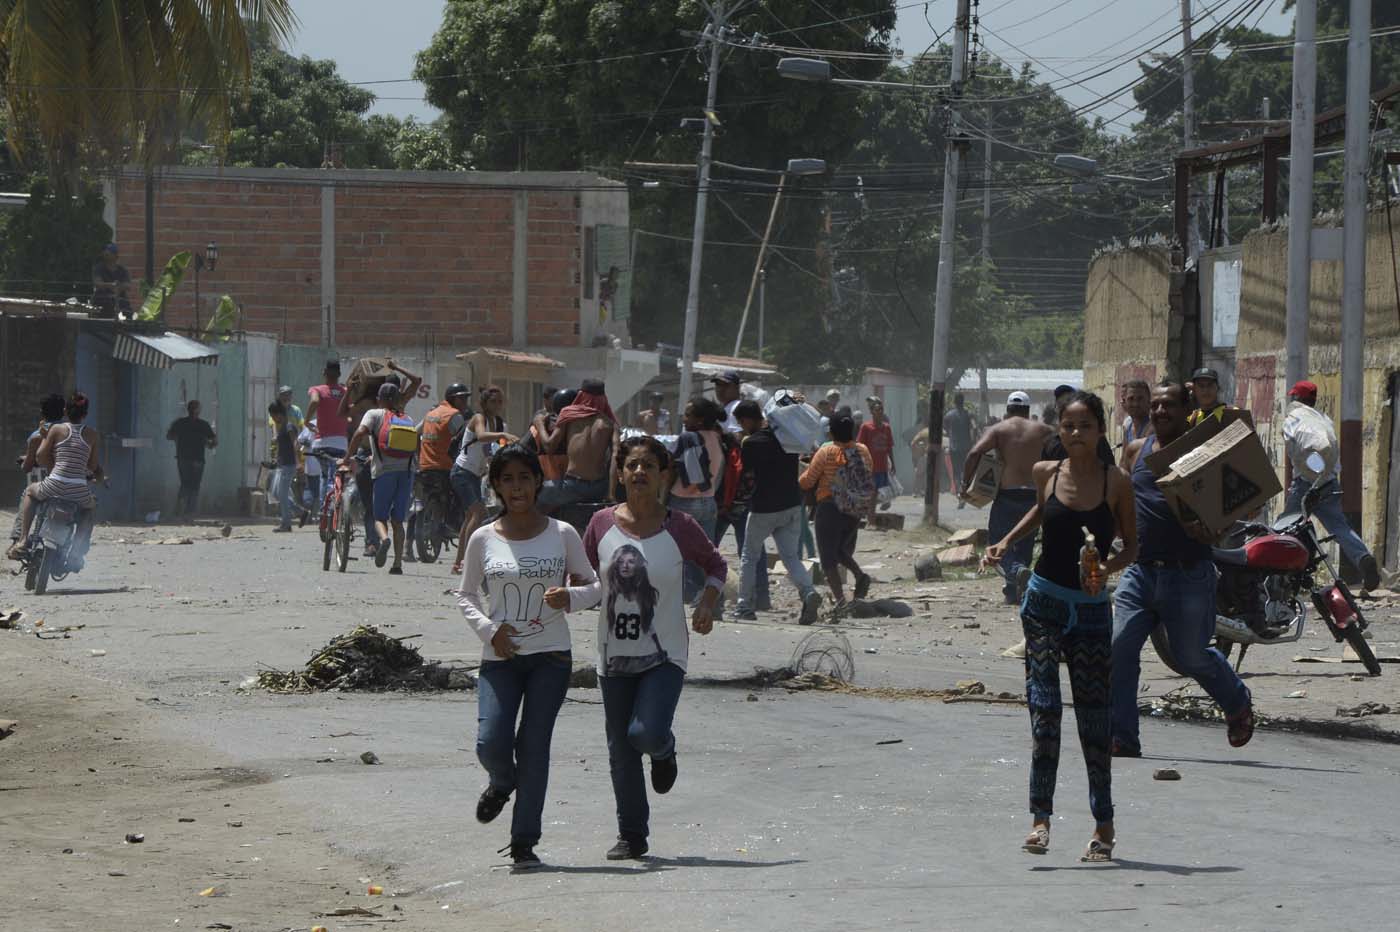 Locals run carrying stolen merchandise during lootings in Maracay, Aragua state, Venezuela on June 27, 2017. / AFP PHOTO / Federico Parra